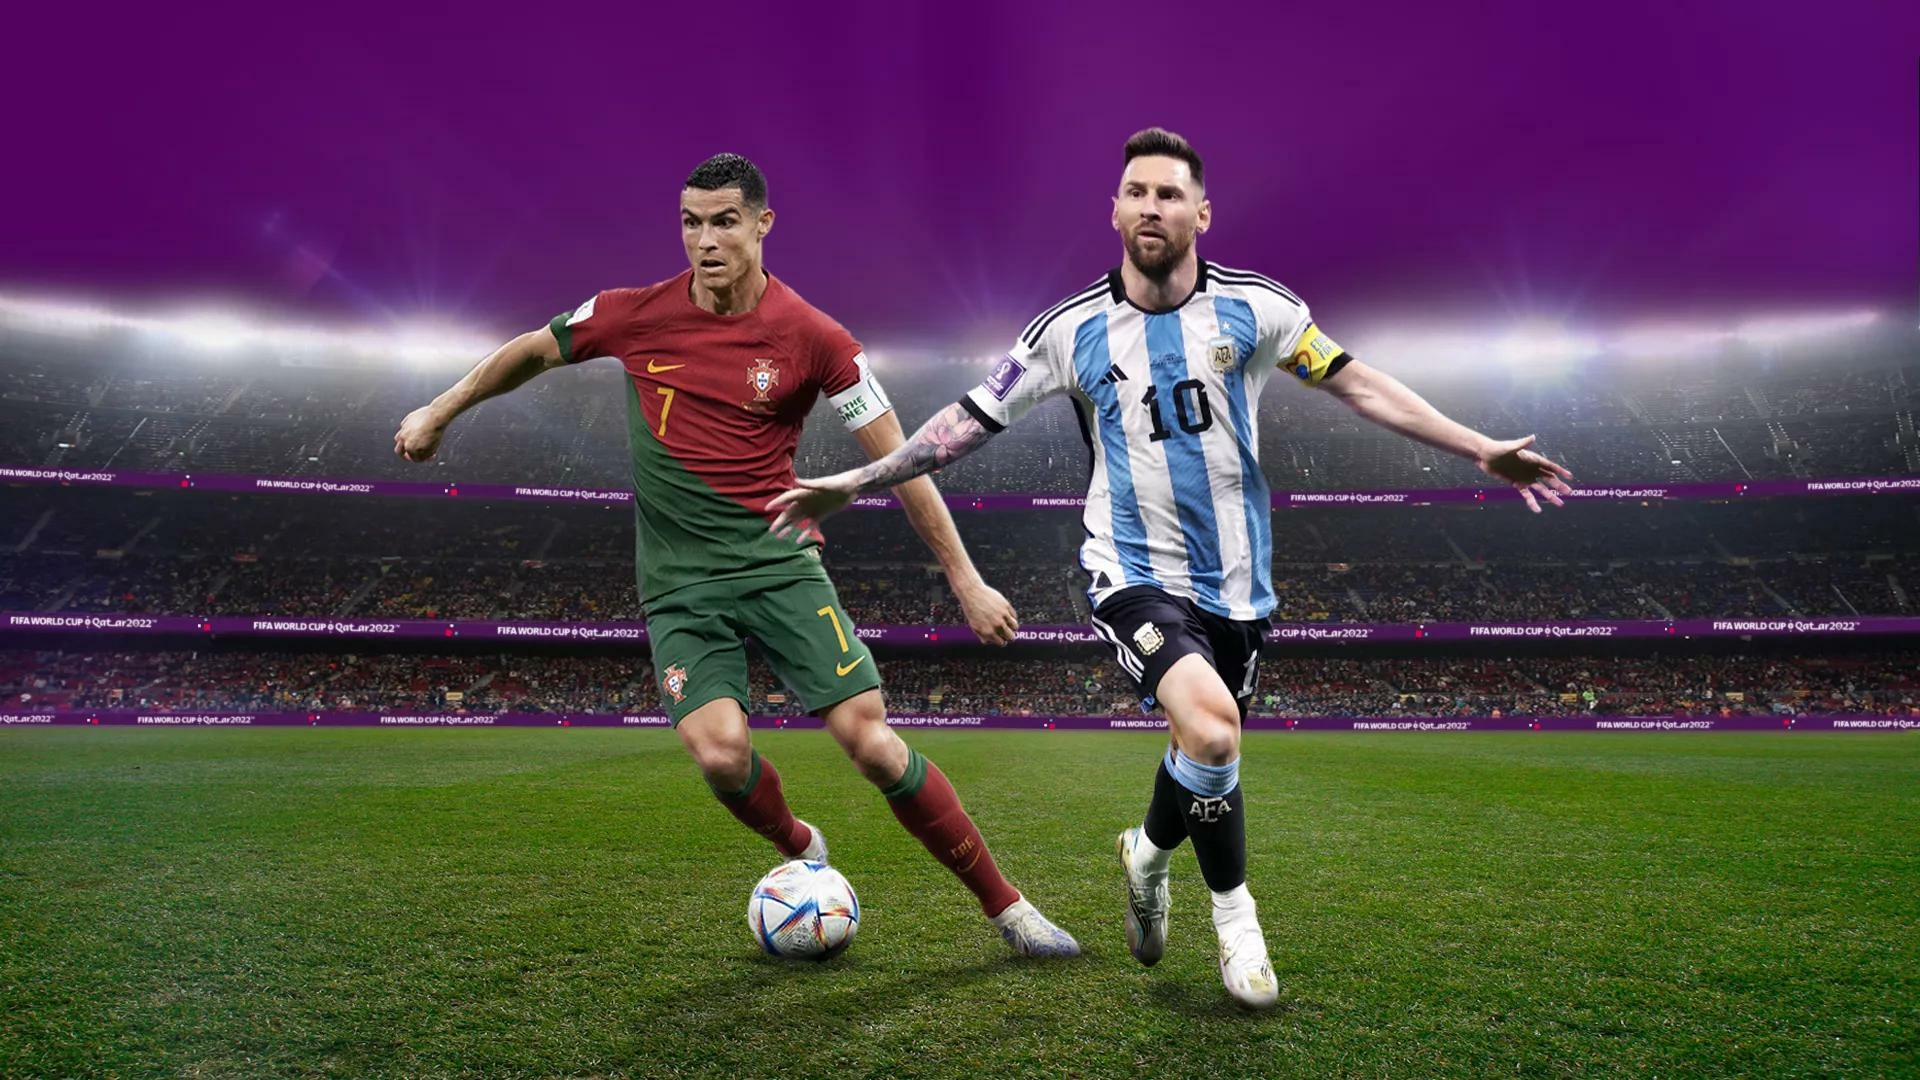 RonaldoMessiNeymar  Messi vs ronaldo Messi and ronaldo wallpaper  Cristiano ronaldo and messi